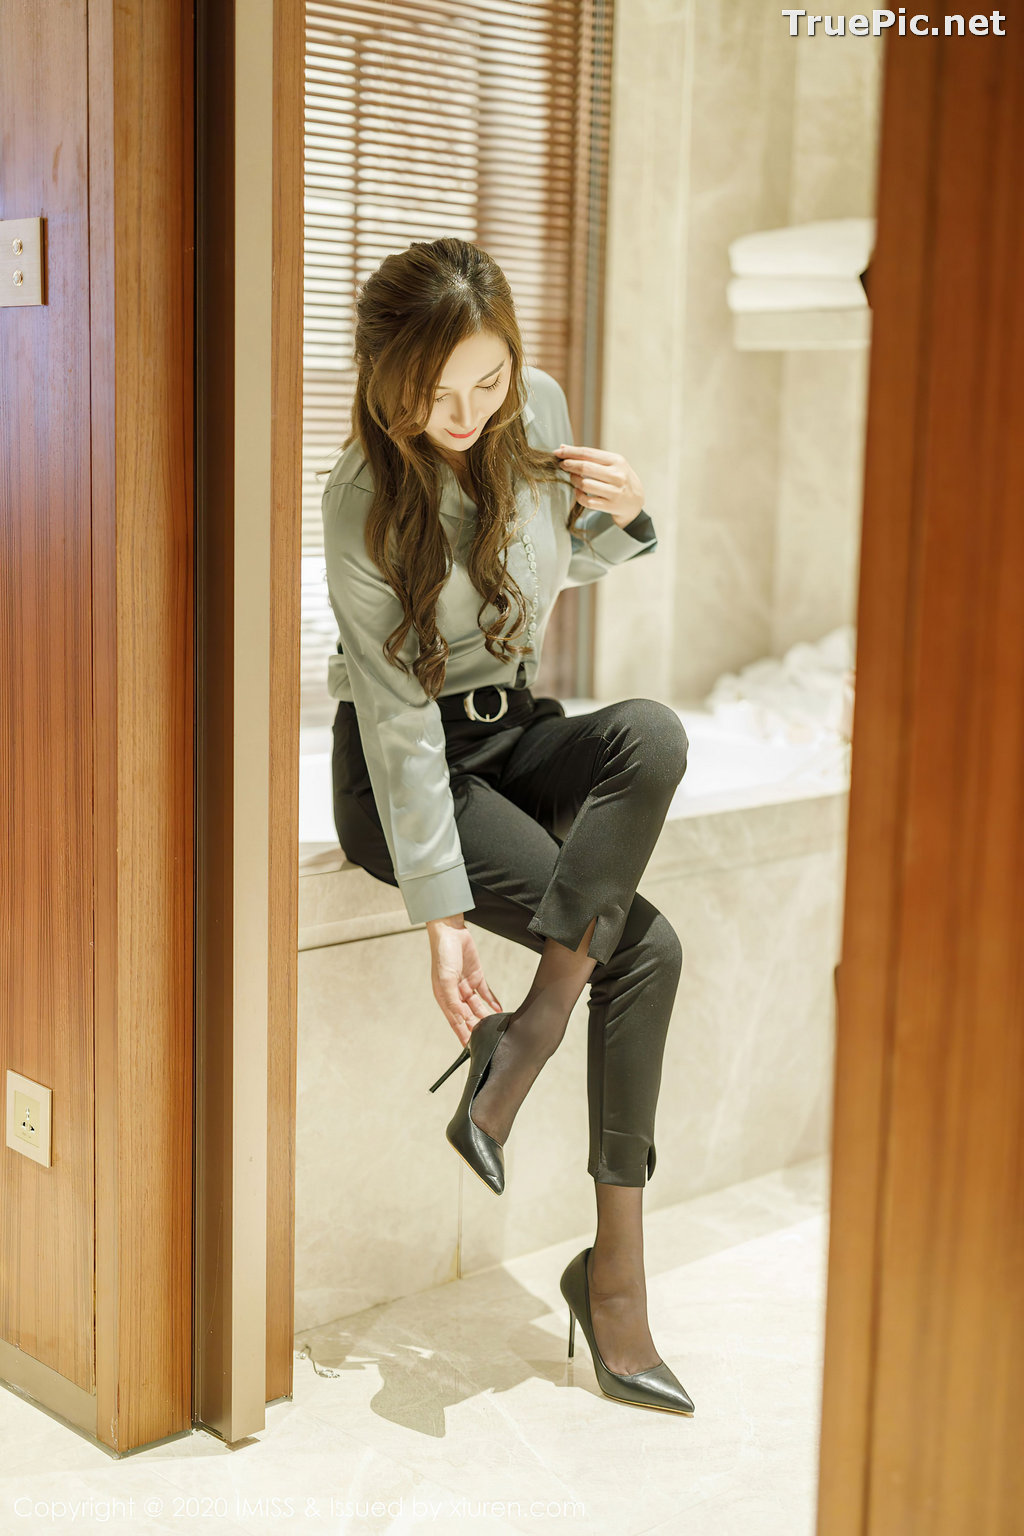 Image IMISS Vol.492 - Chinese Model - Lavinia肉肉 - Long Legs Office Girl - TruePic.net - Picture-23